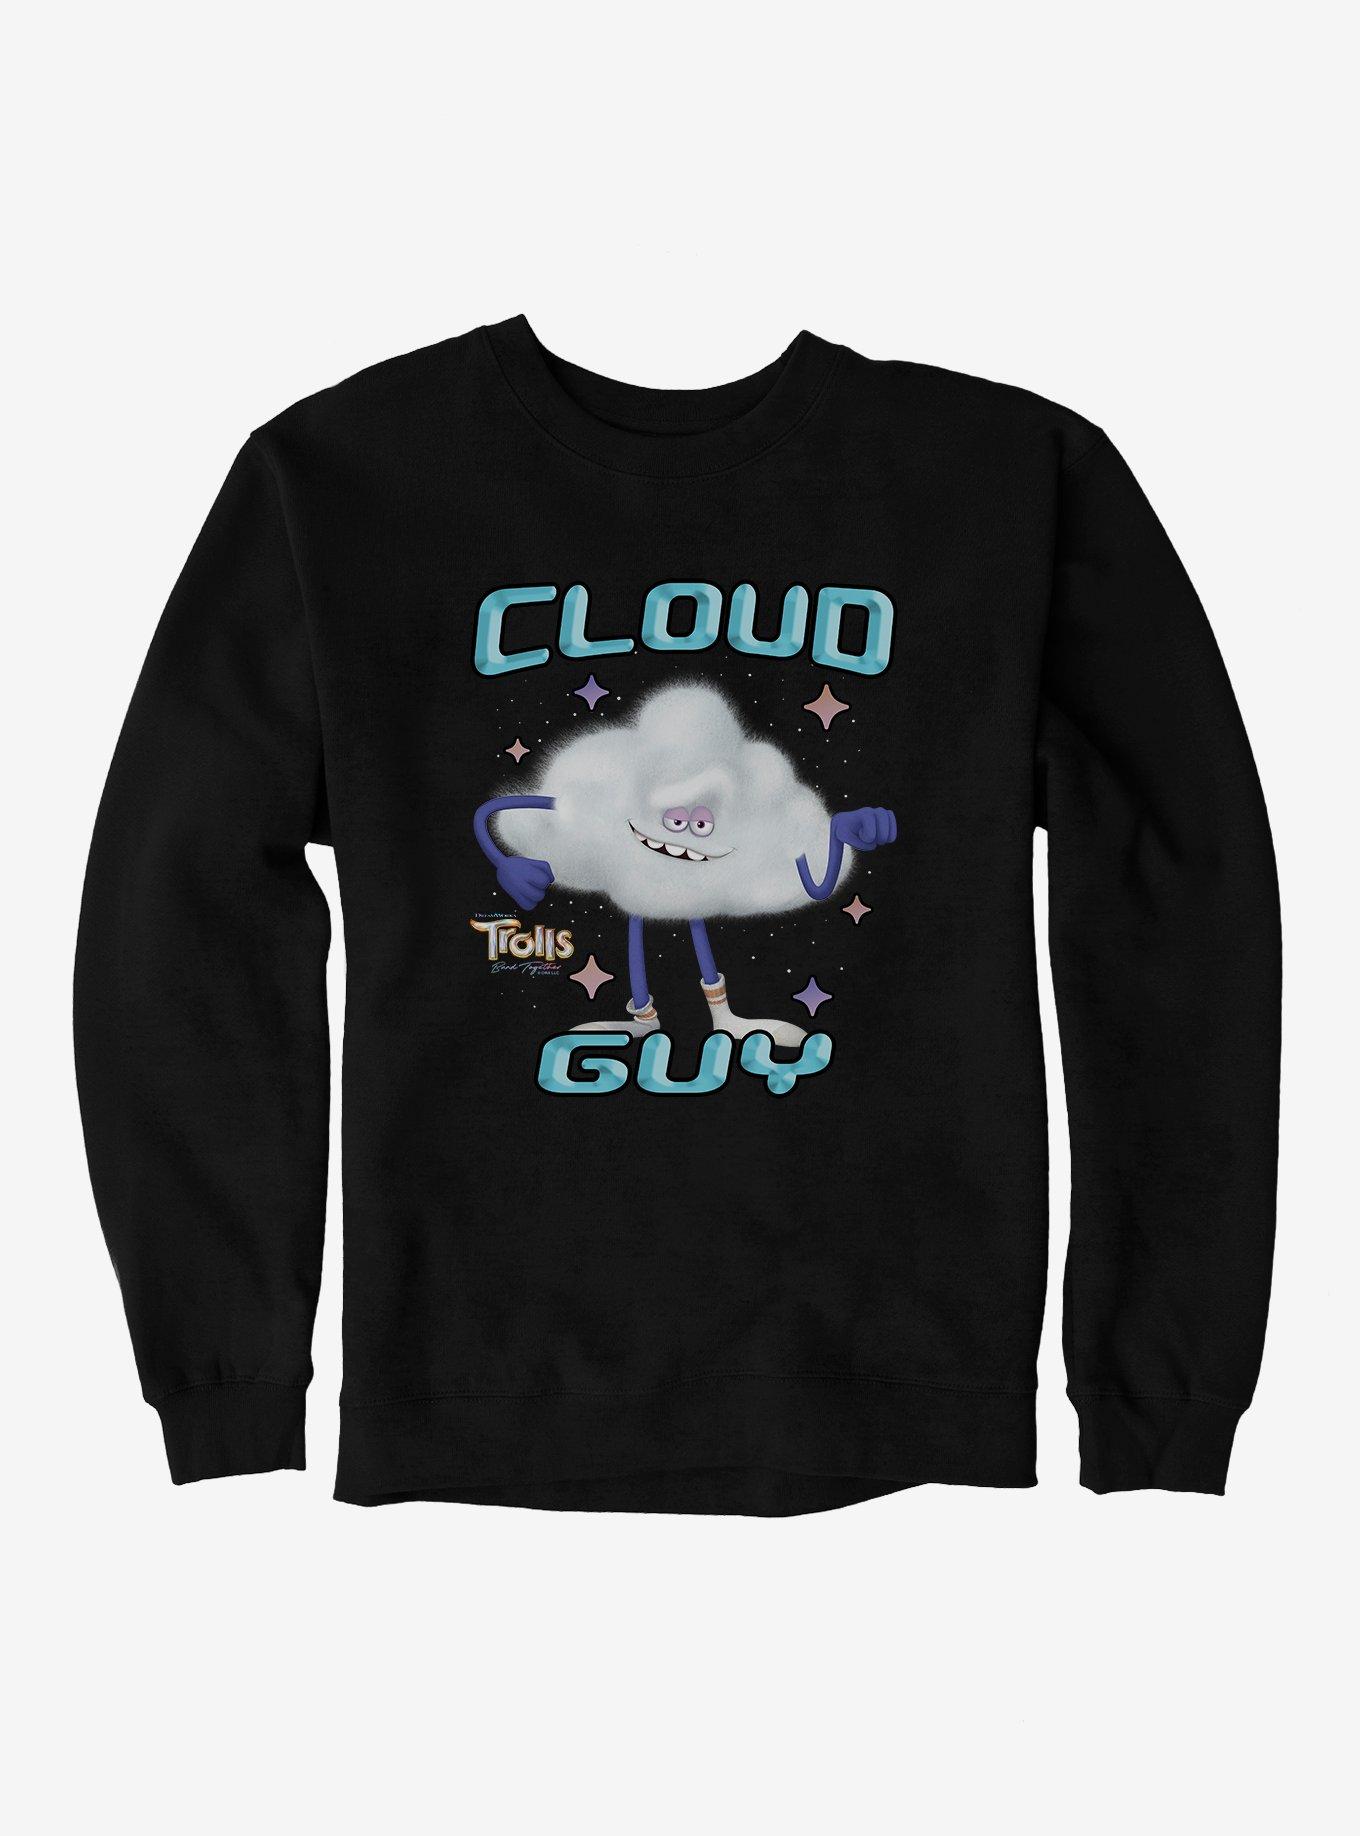 Trolls 3 Band Together Cloud Guy Sweatshirt